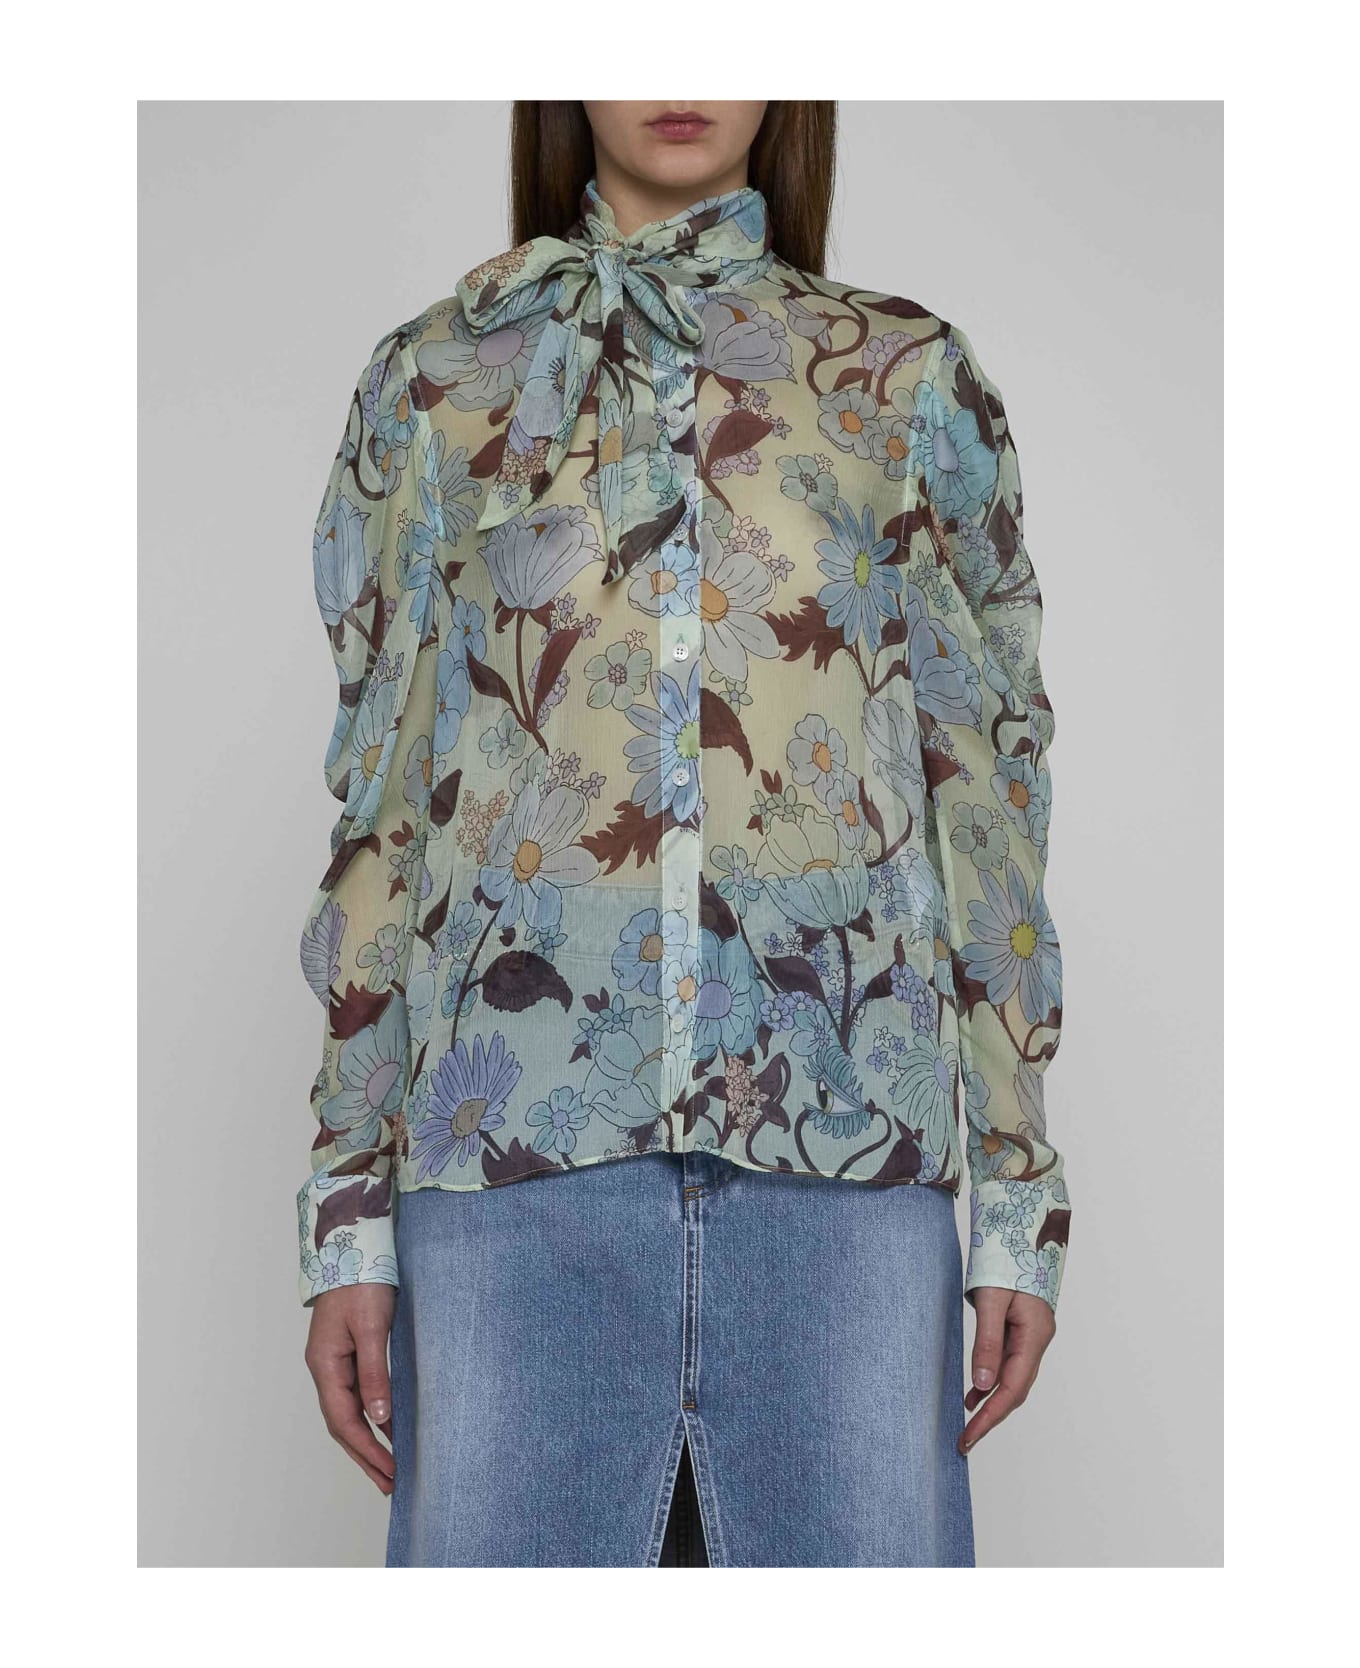 Stella McCartney Floral Print Silk Shirt - Multicolor mint ブラウス